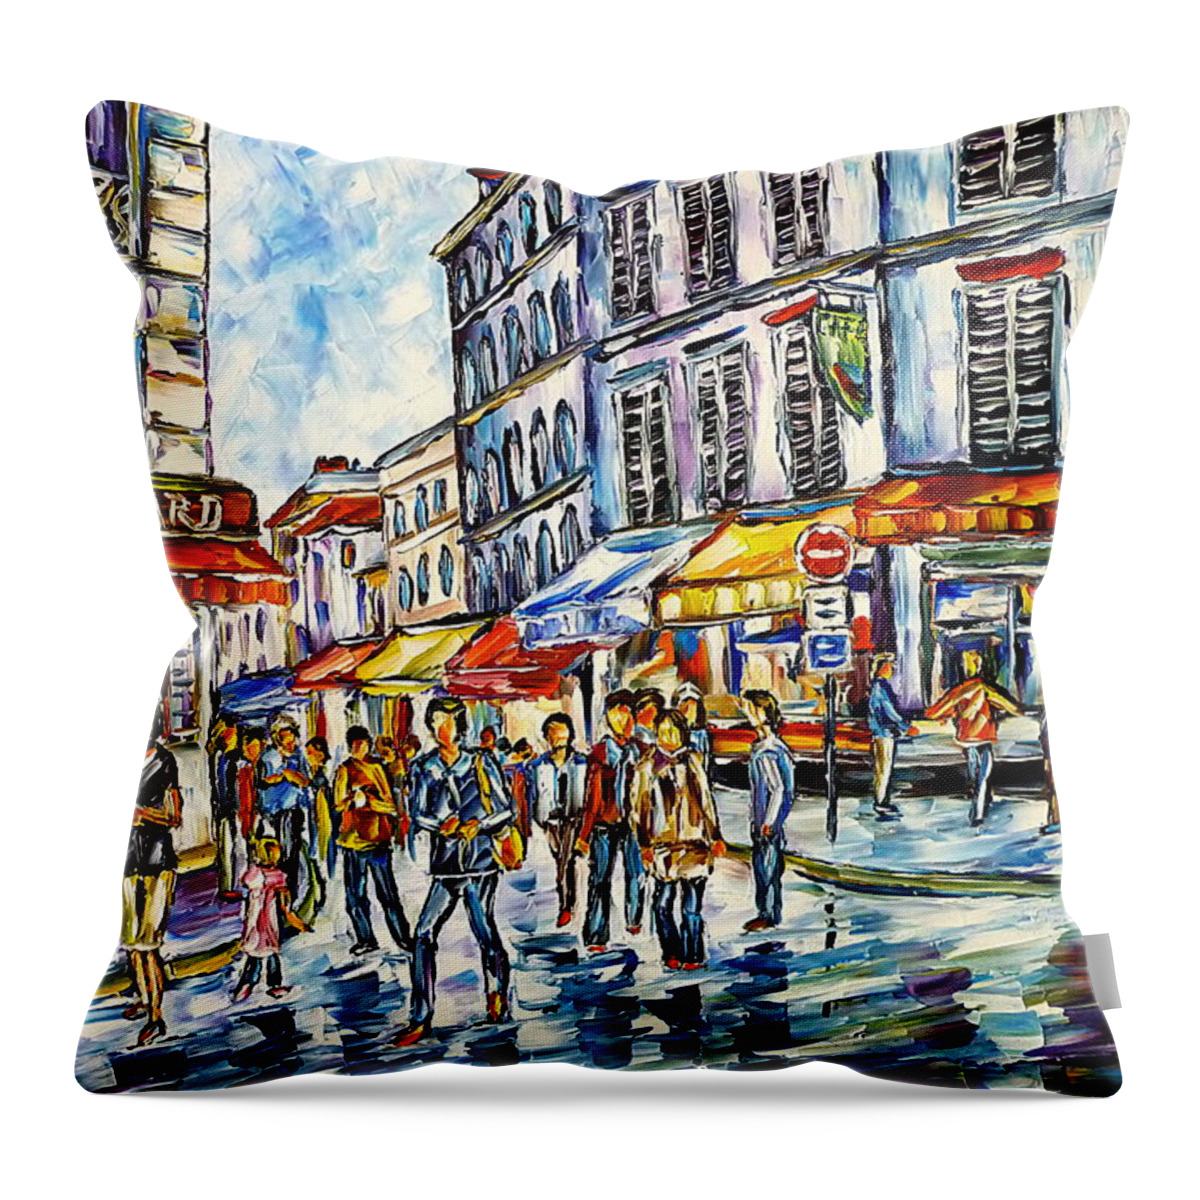 People Celebrate Throw Pillow featuring the painting Paris July 14th by Mirek Kuzniar